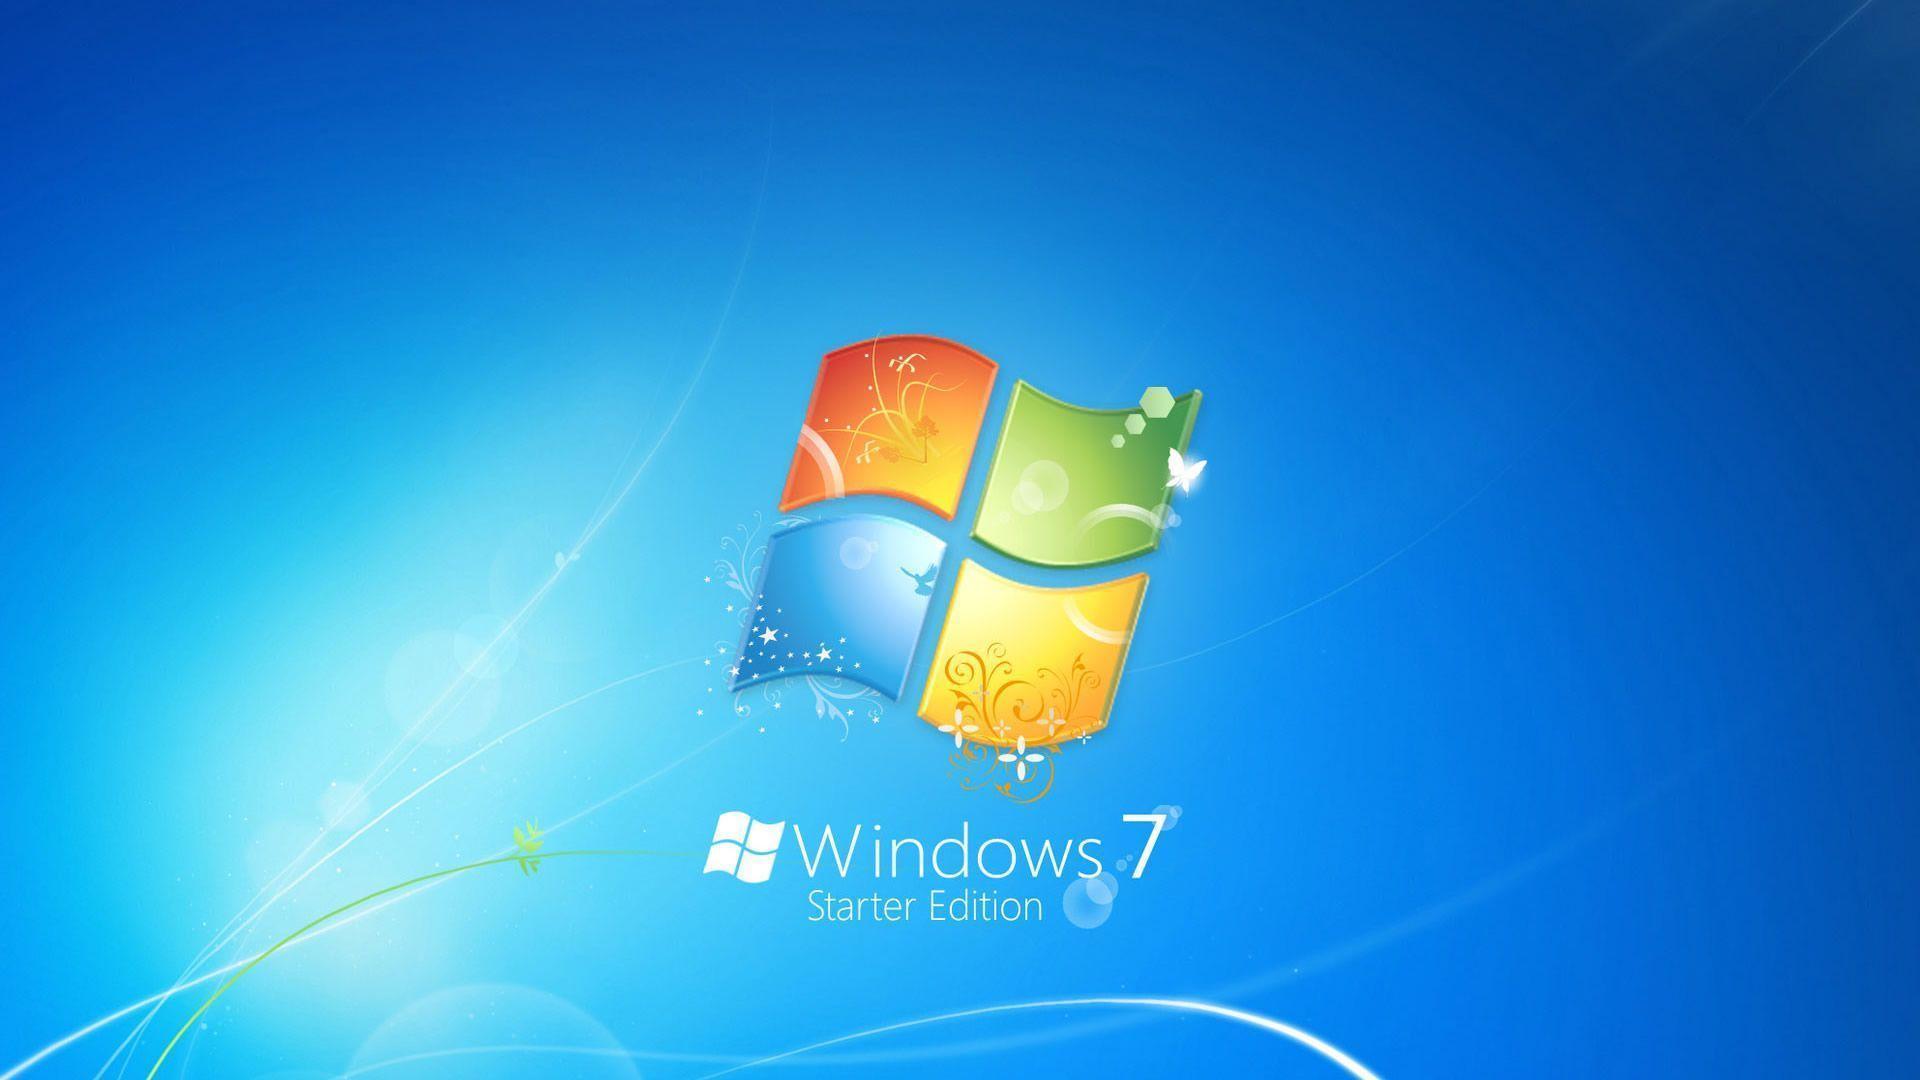 Windows 7 Desktop Wallpaper. Wallpaper For Desktop and Mobile